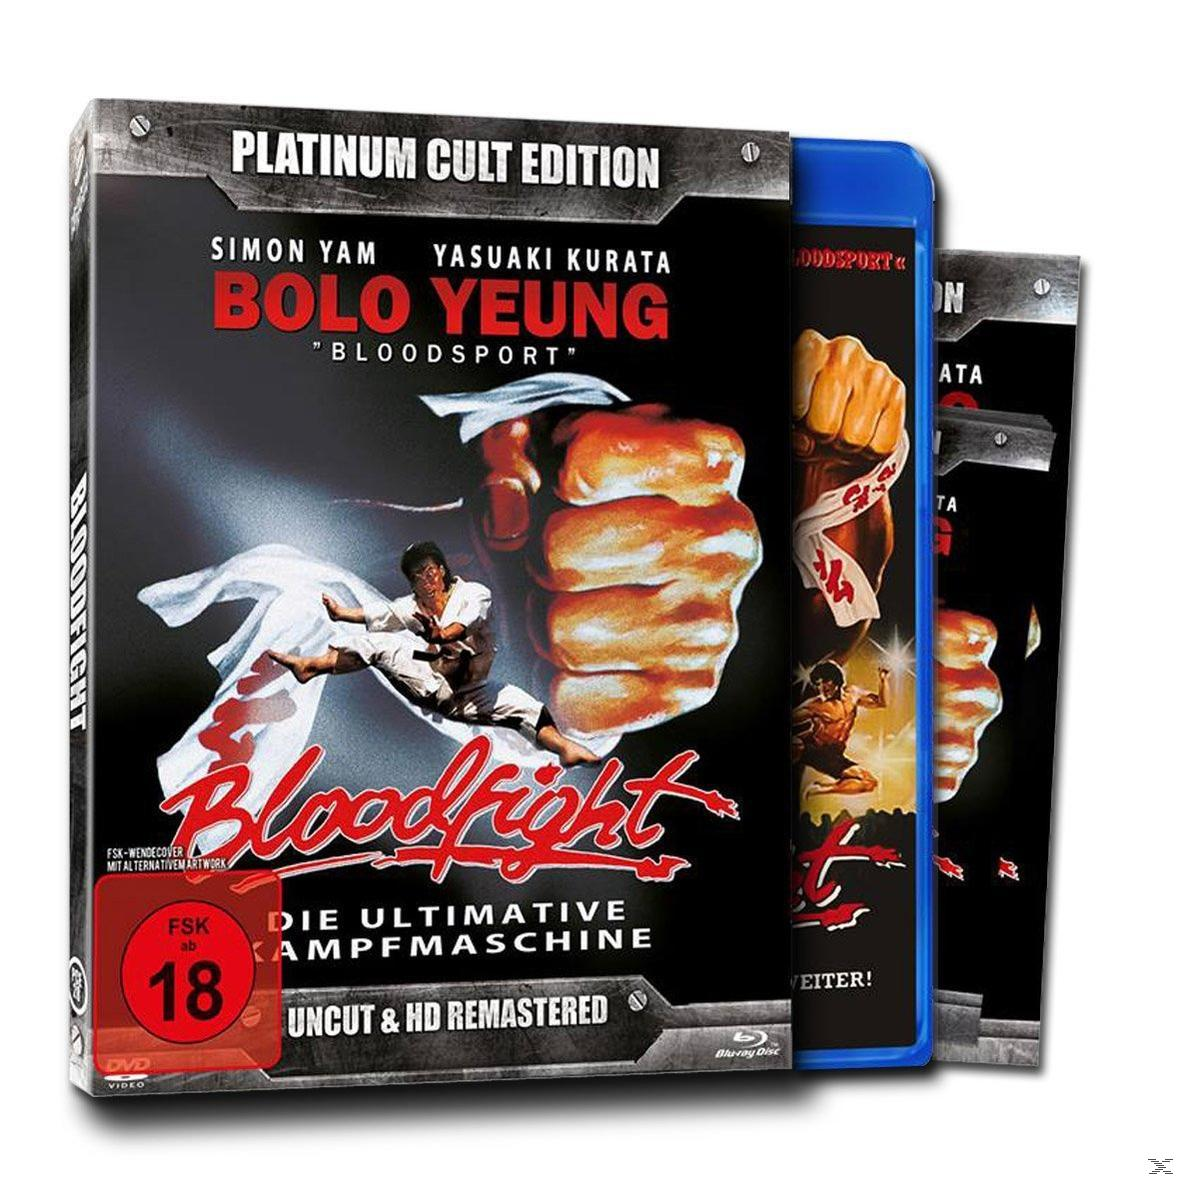 Blu-ray + DVD Bloodfight